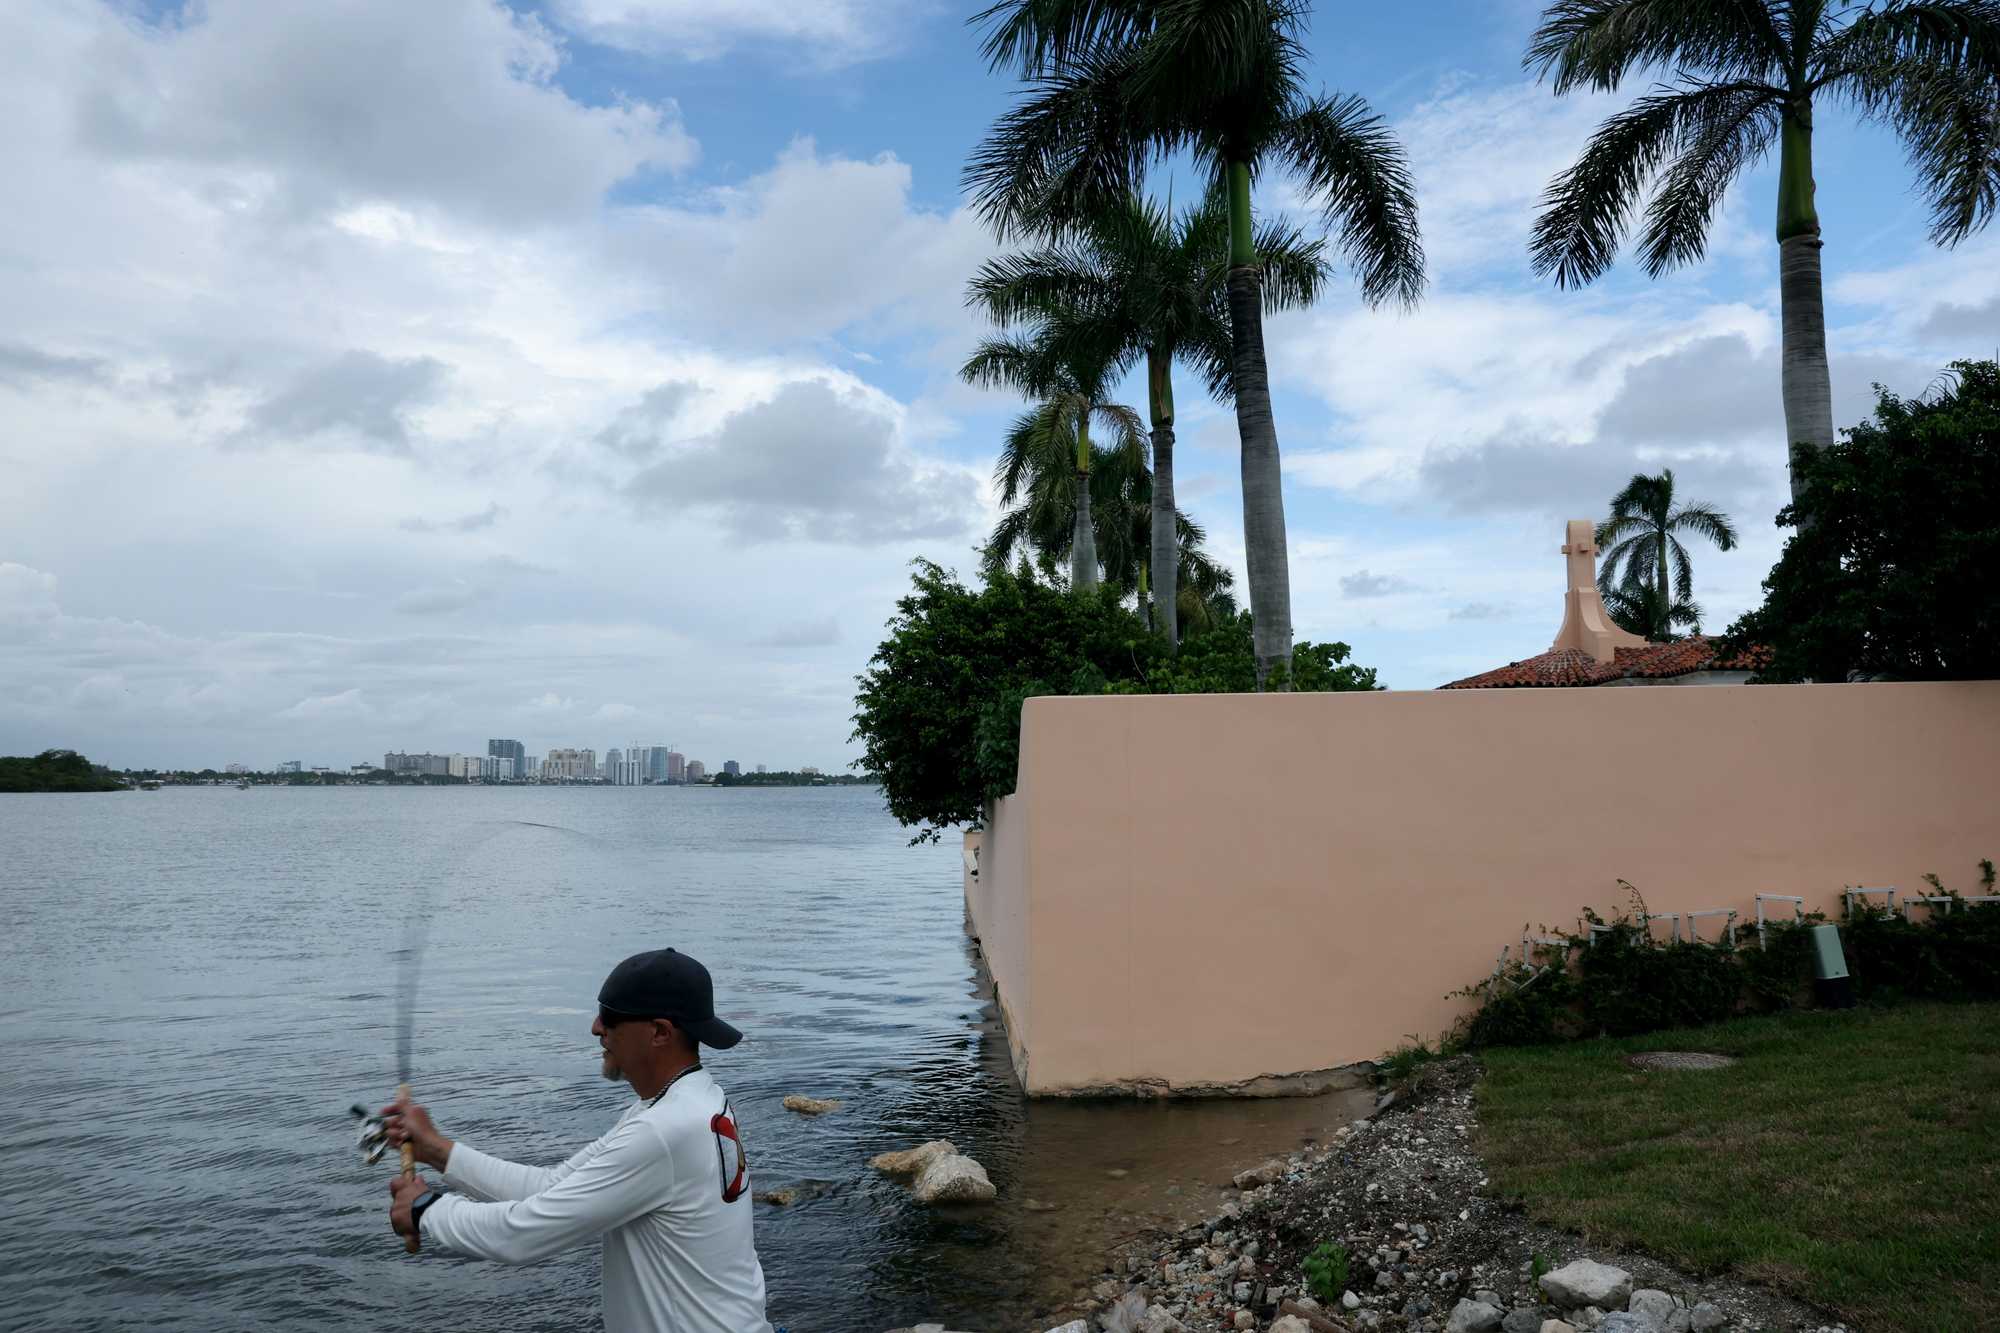 Palm Beach resident Joseph Cafarelli fished off the shore of Lake Worth Lagoon outside the Mar-a-Lago Club. 